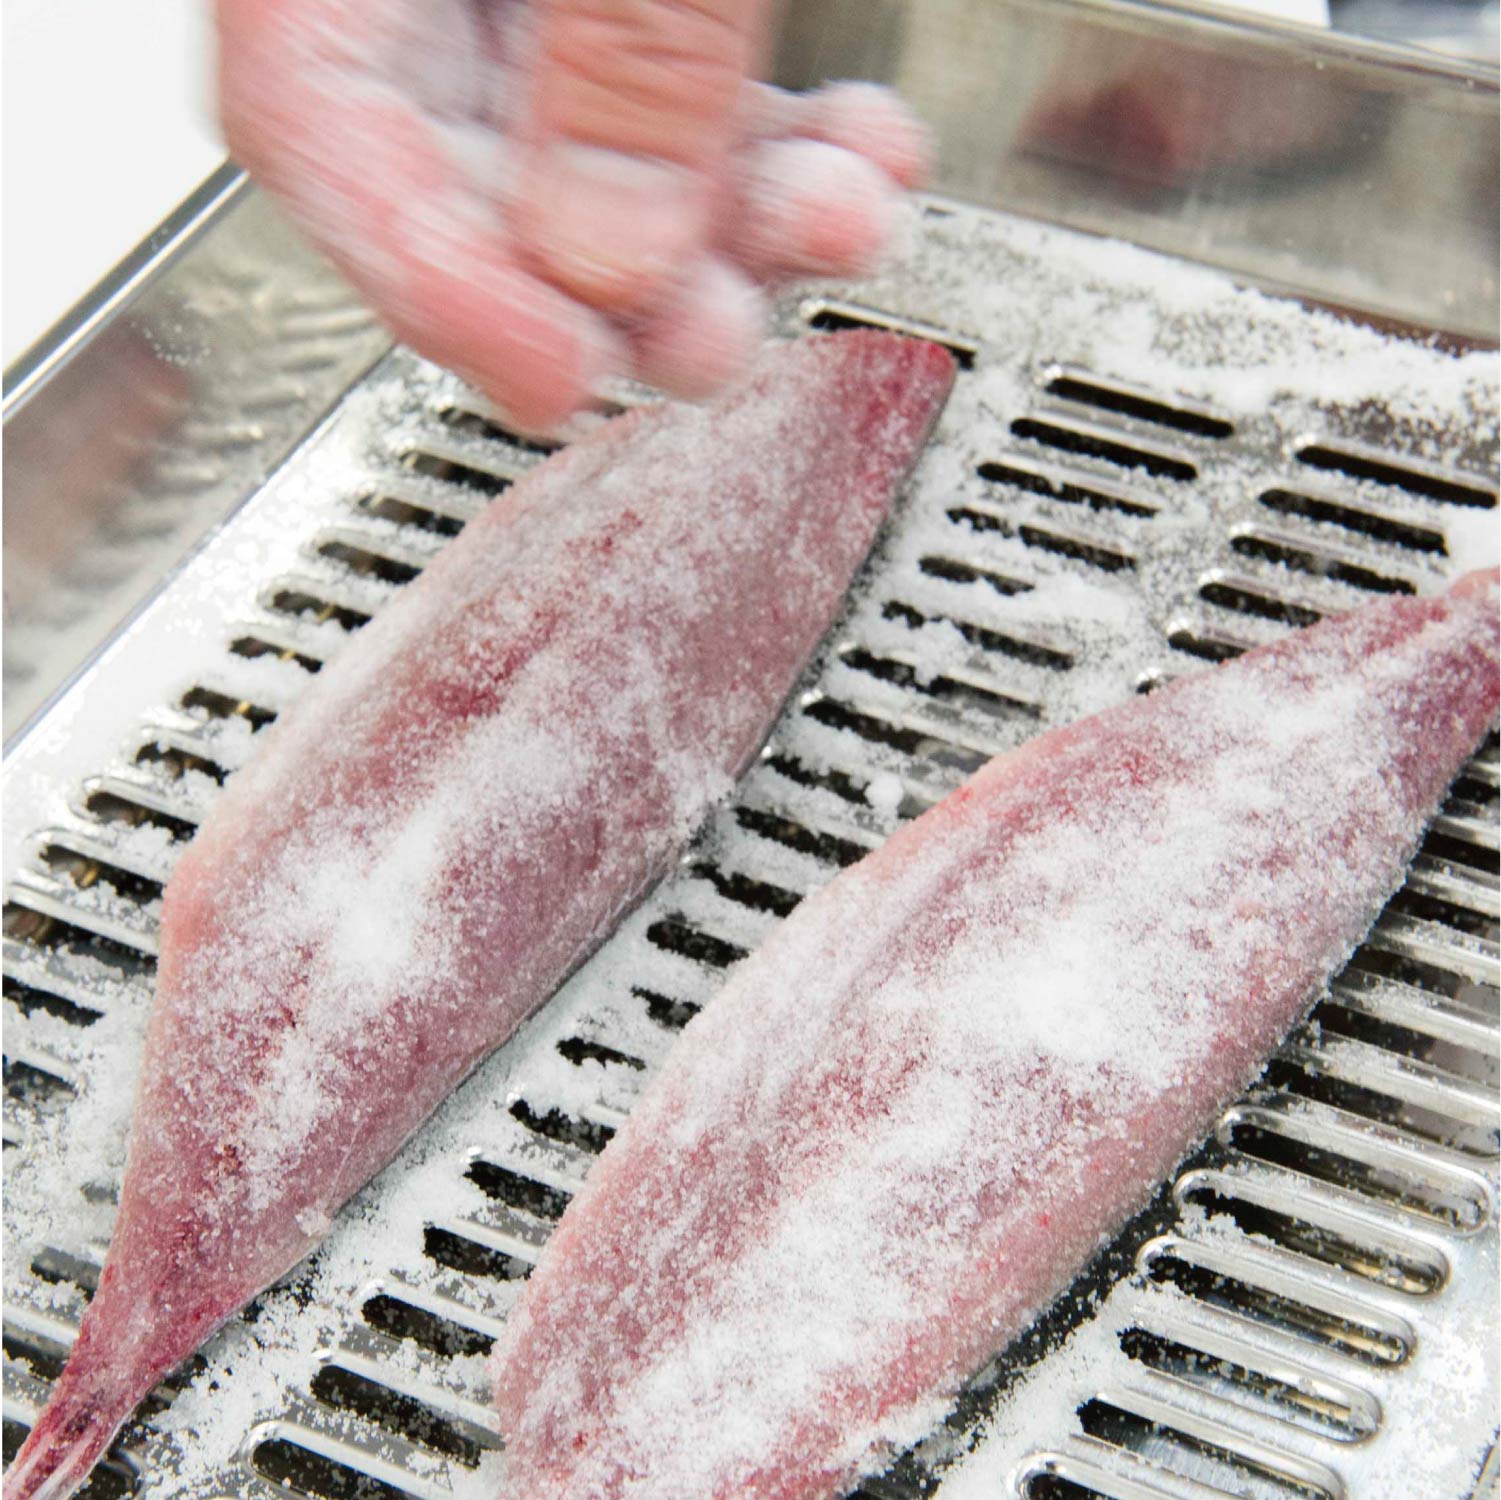 Treating mackerel fillets with TREHA-salt